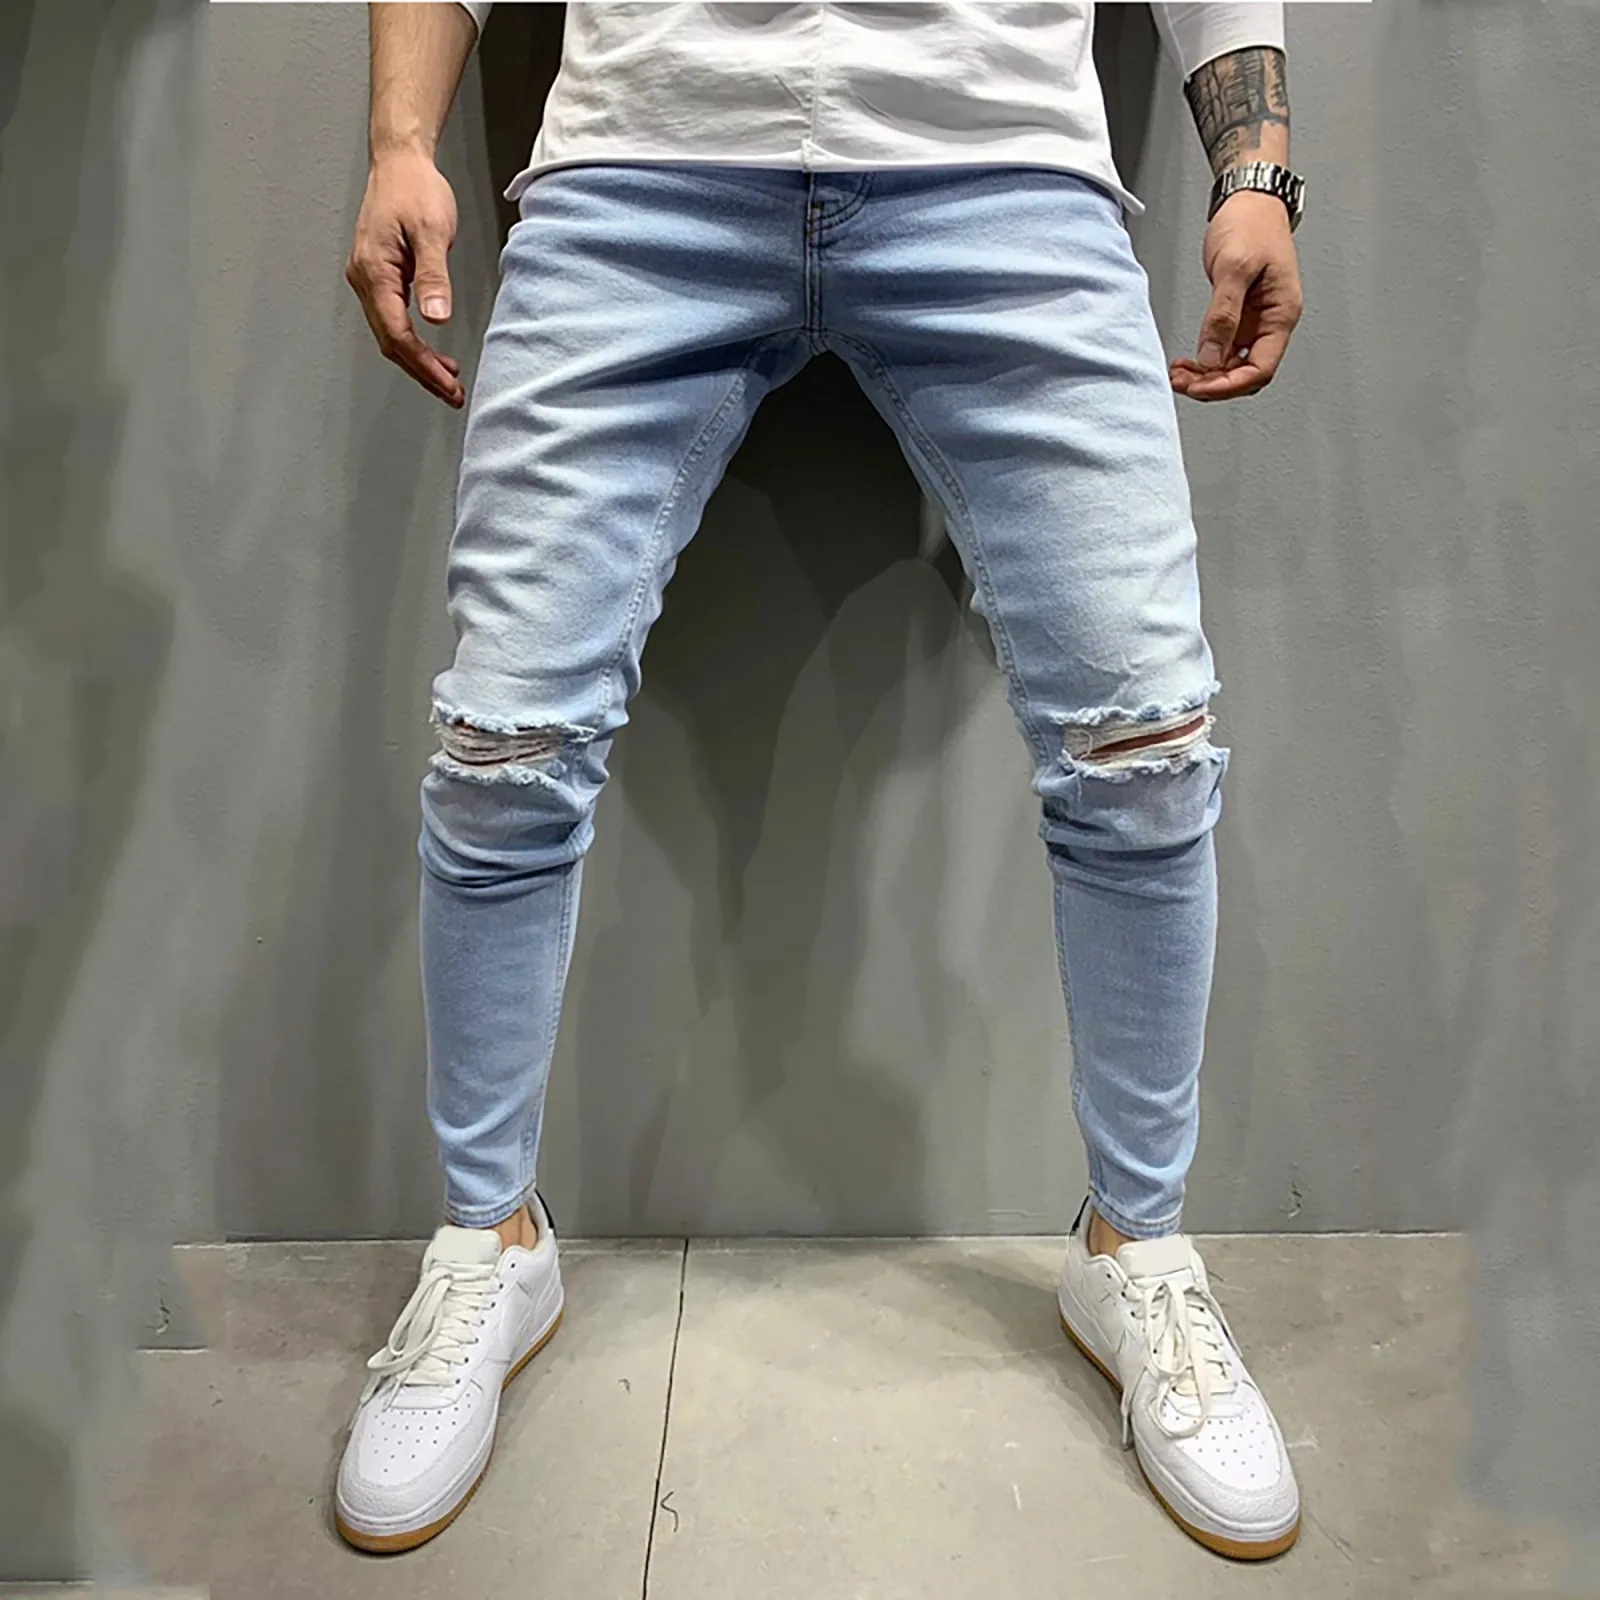 

New Men's Fashion Solid Colors High Waist Denim Trouser Hole Distressed Jeans Long Pencil Pants Streetwear Pantalones Hombre#g3